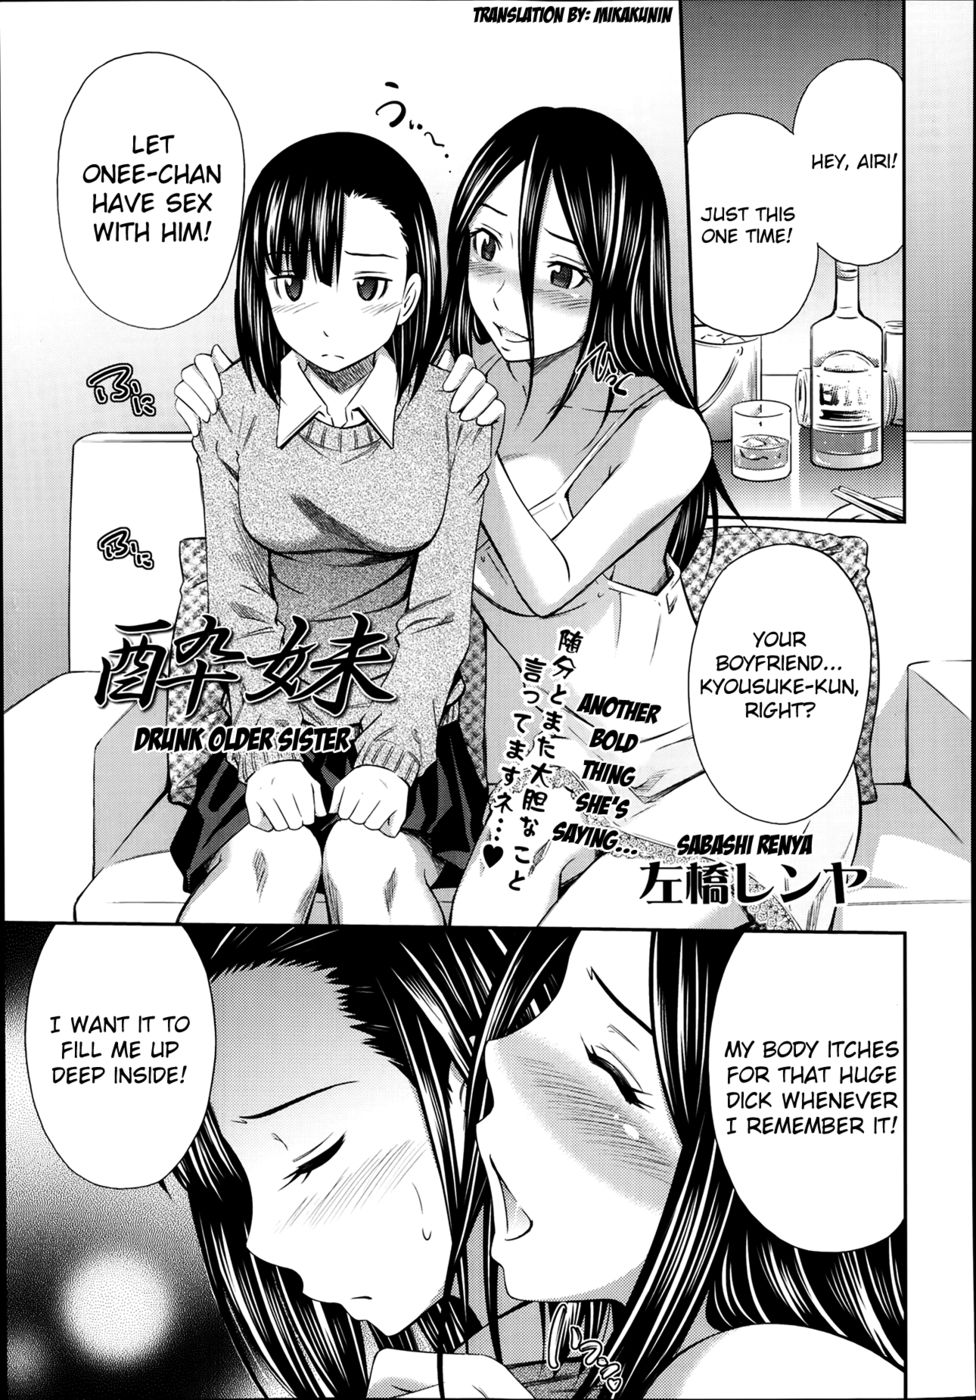 Drunk Older Sister Chapter 2 Hentai Manga Hentai Comic Online